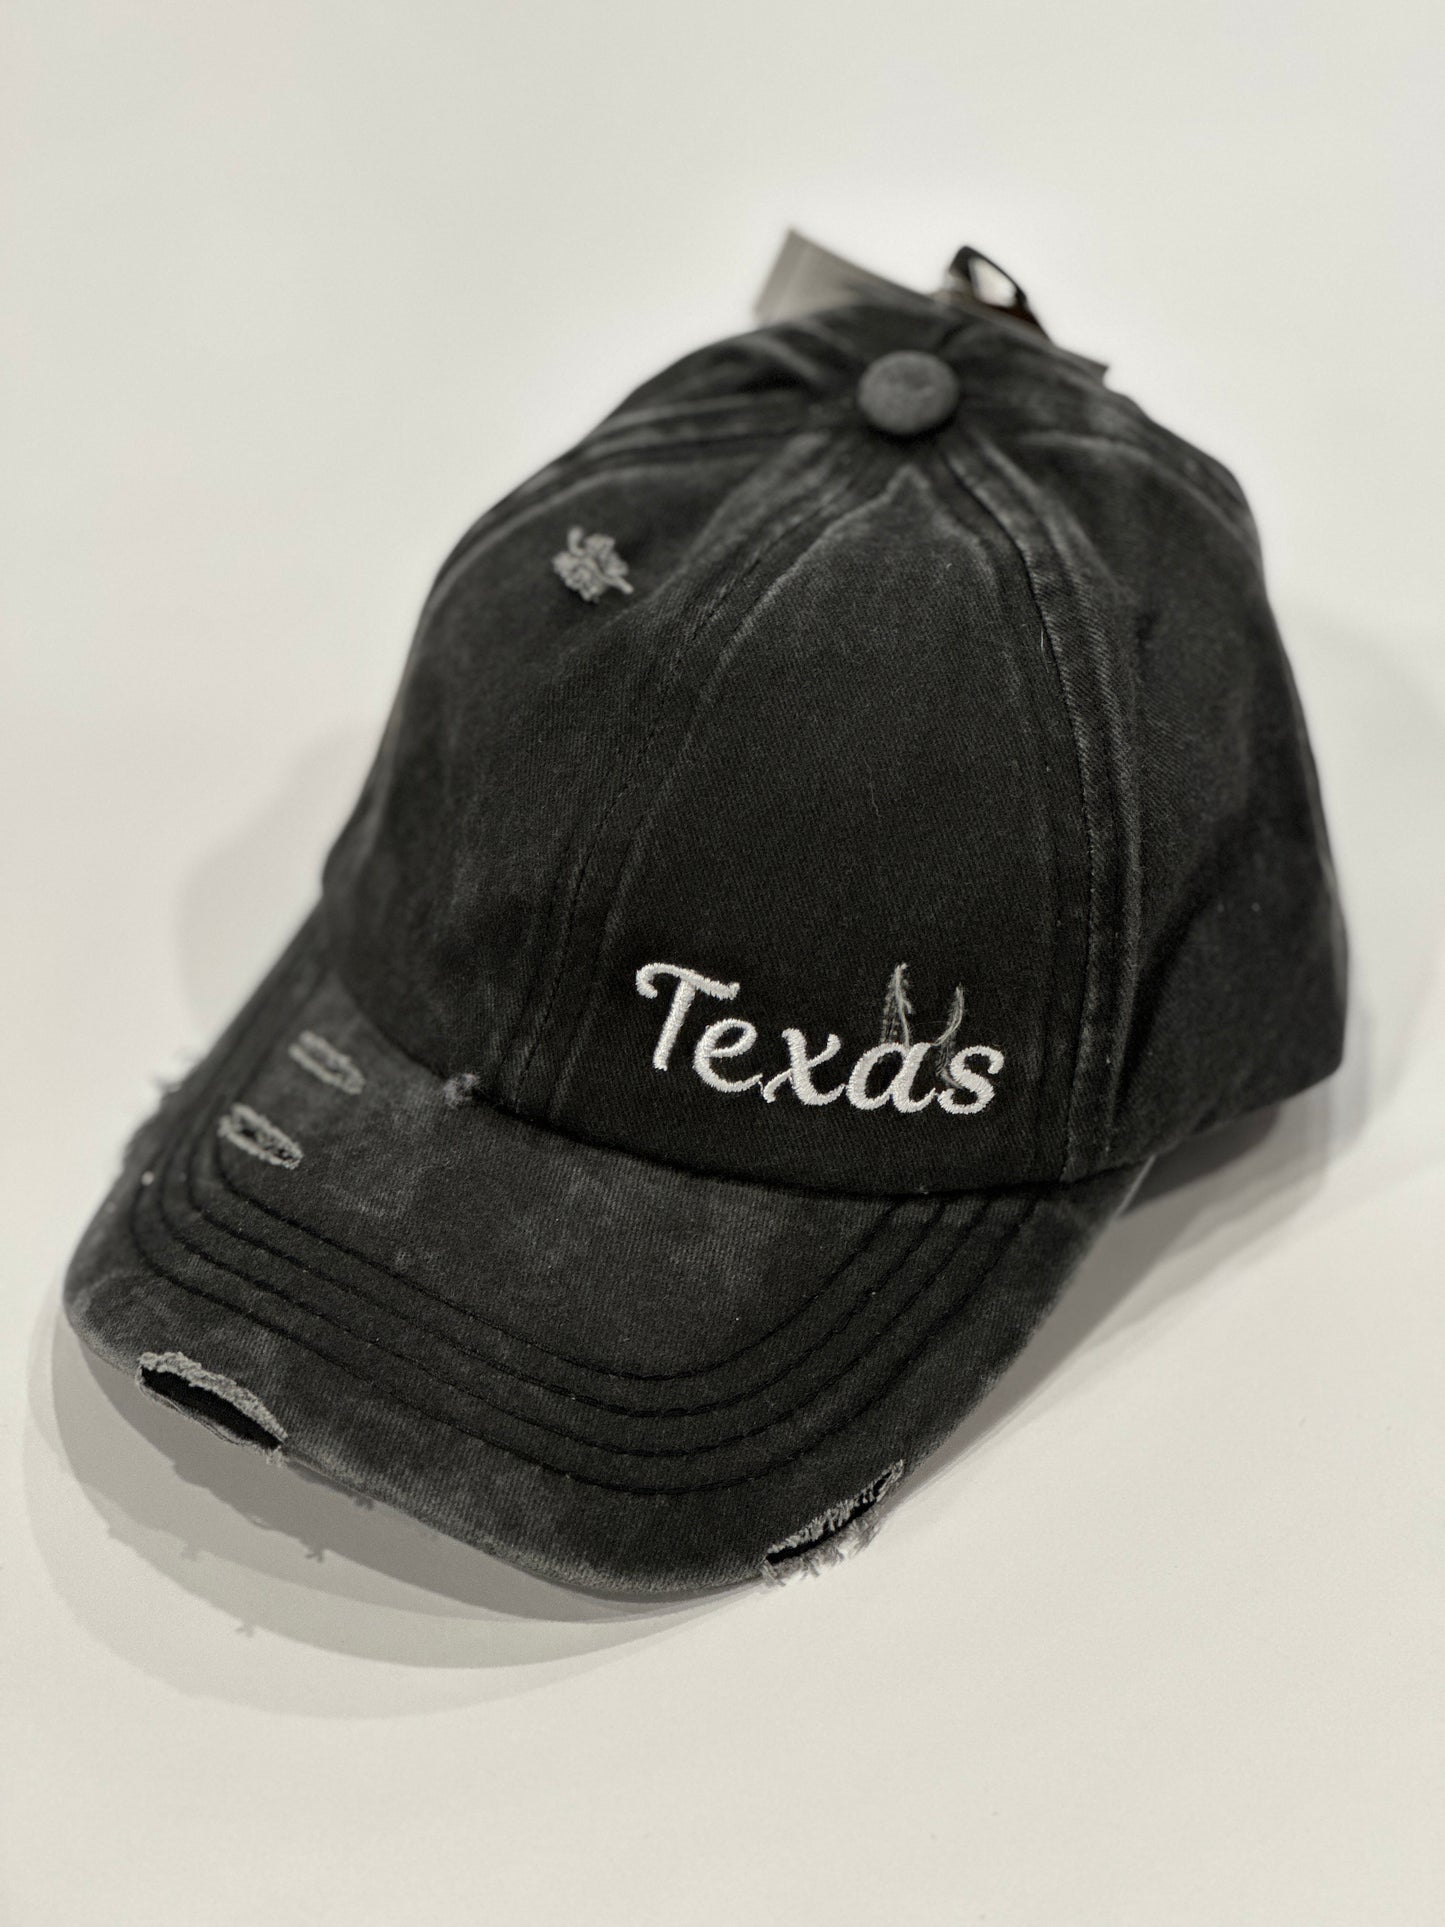 C.C Texas Criss Cross Hat